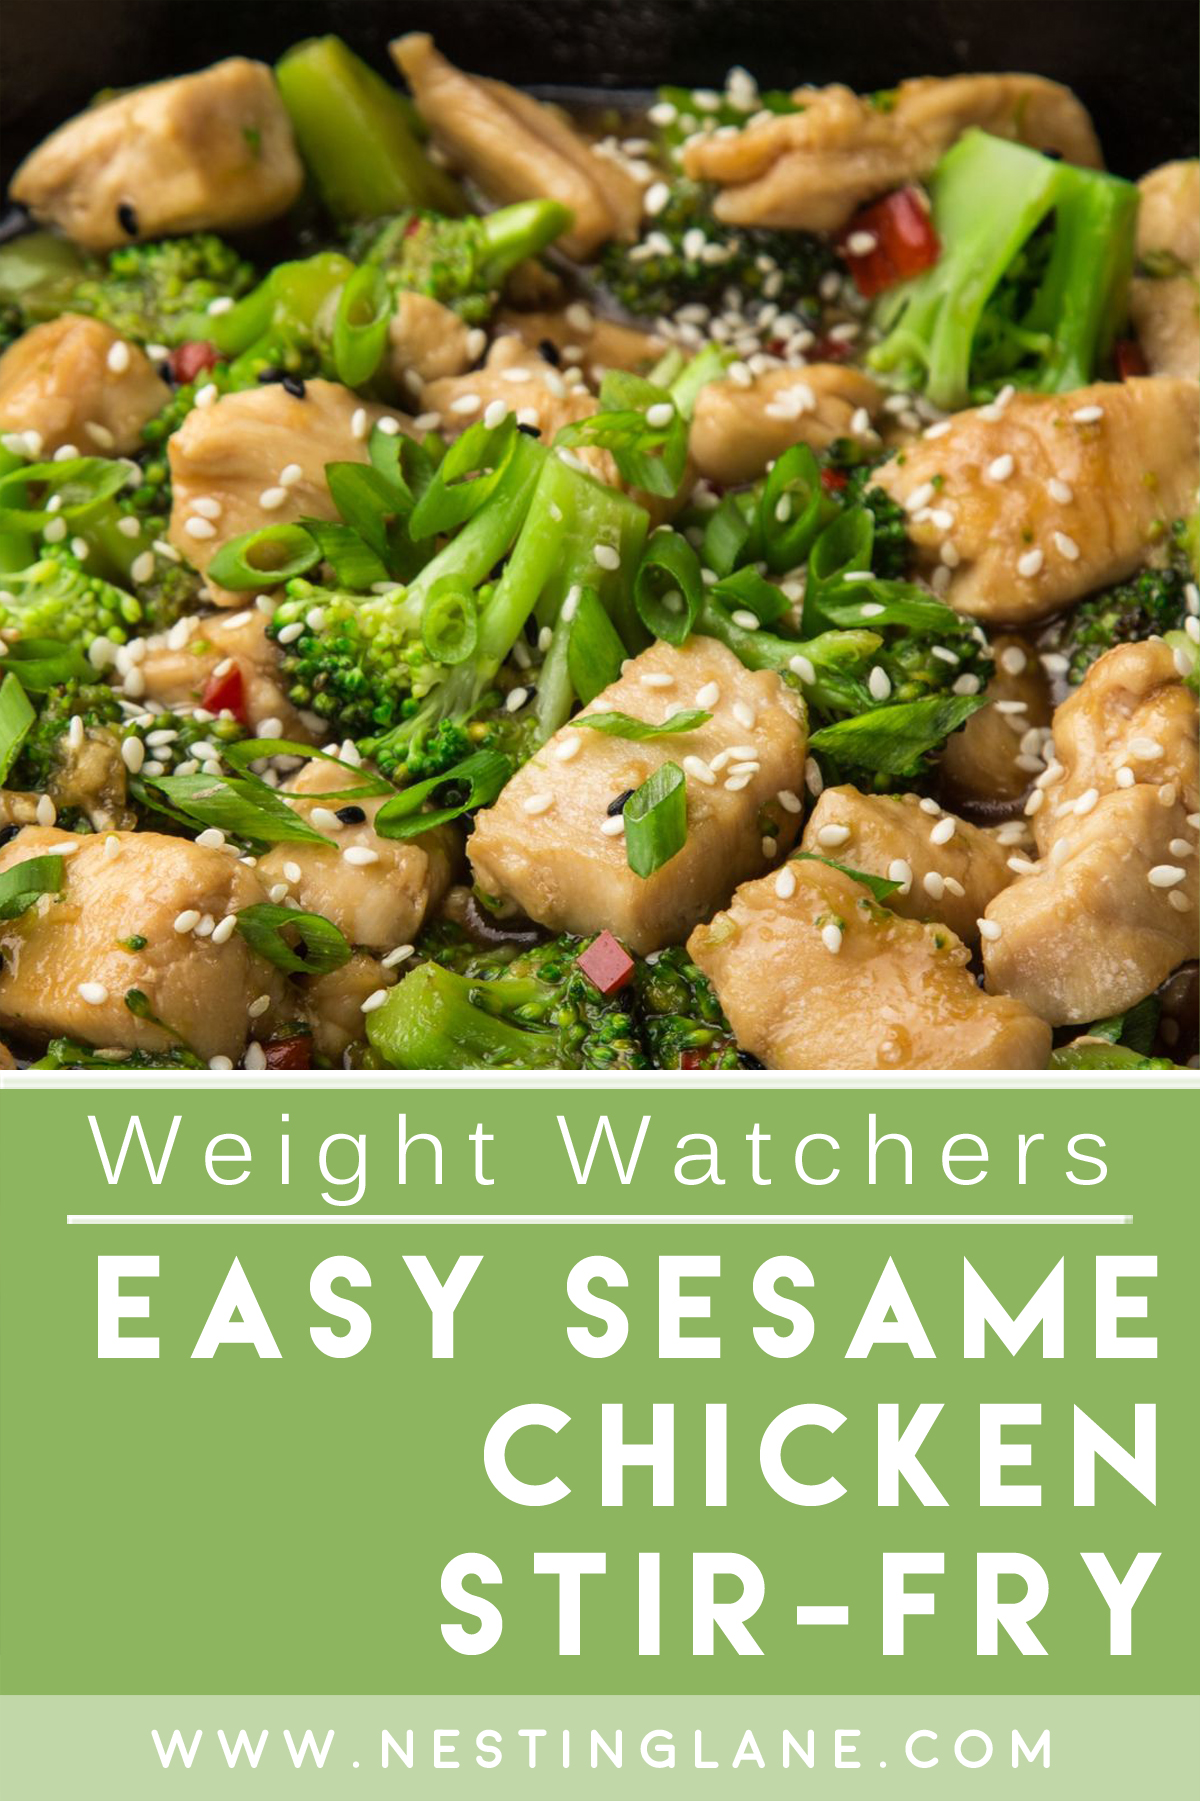 Graphic for Pinterest of Easy Weight Watchers Sesame Chicken Stir-Fry Recipe.